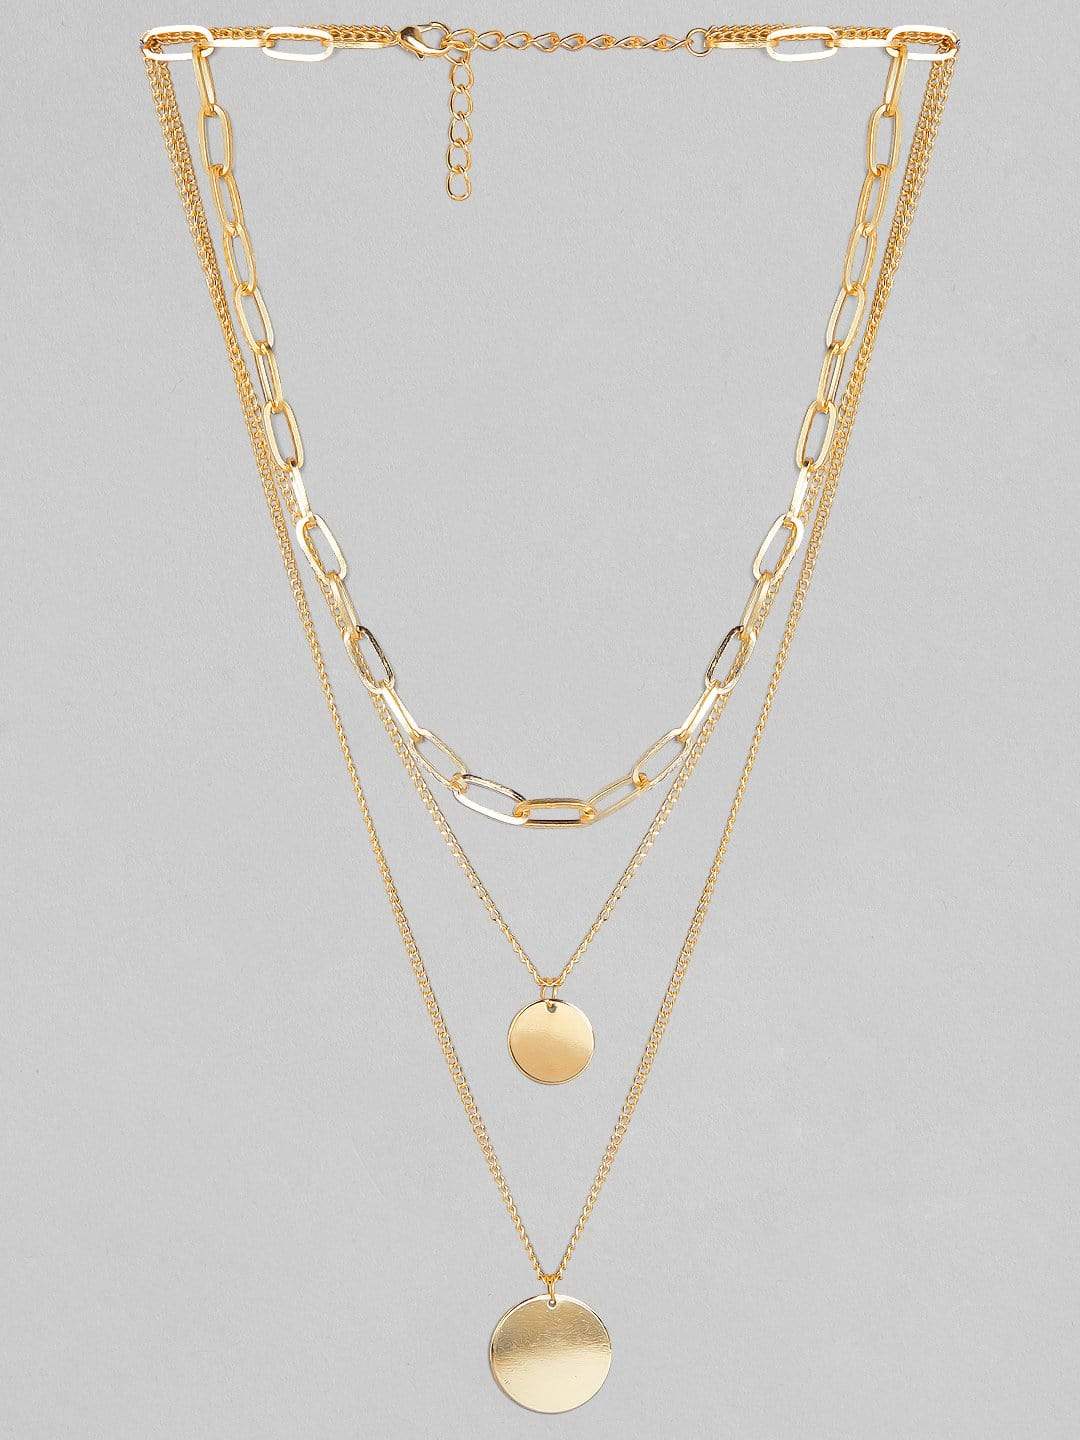 Marco Bicego .50 Carat Diamond Gold Pendant Necklace - petersuchyjewelers